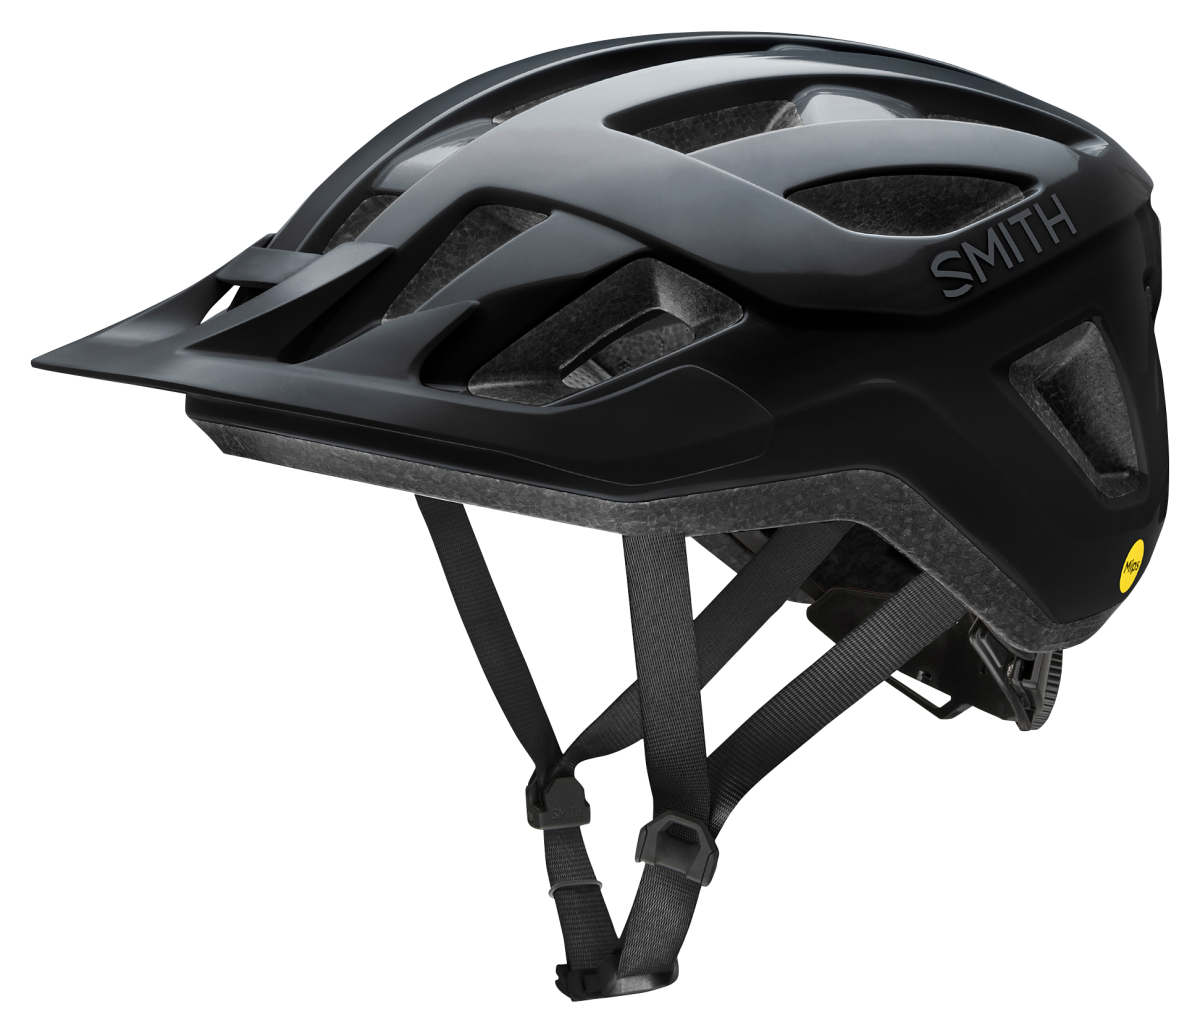 Smith Convoy MIPS Bike Helmet - Black - Small